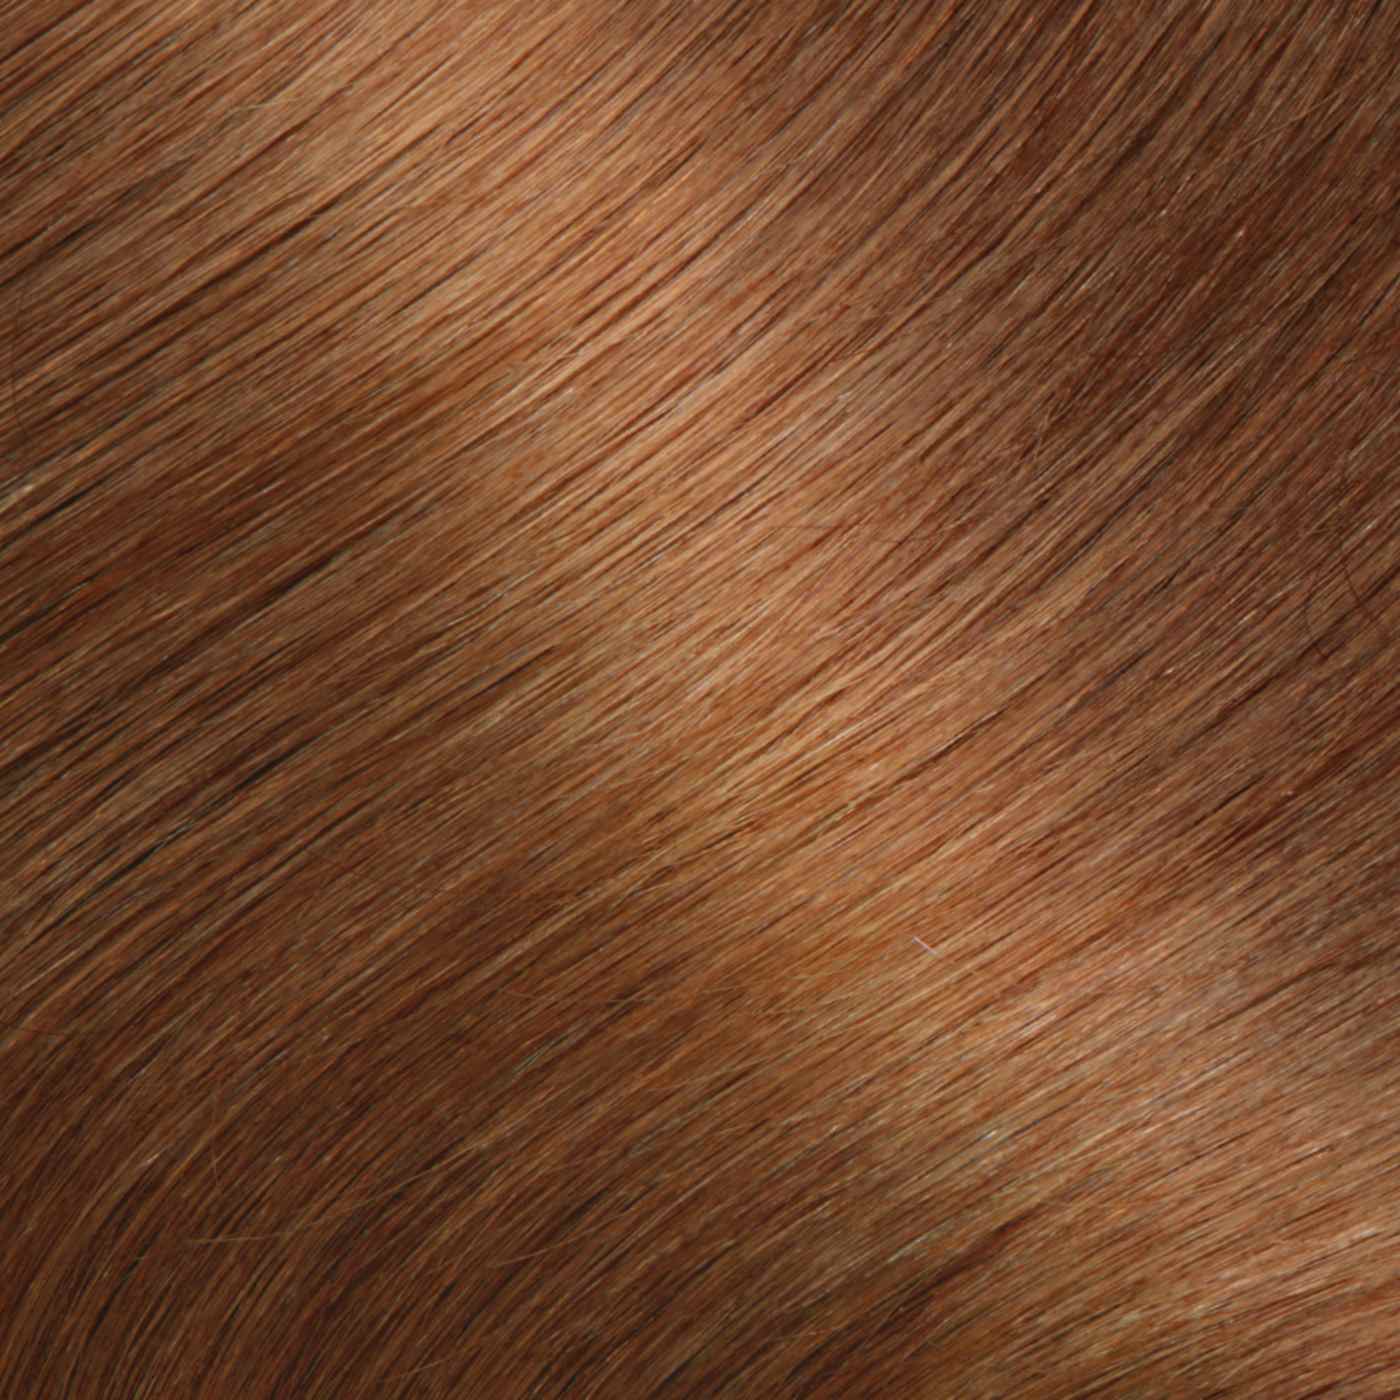 Garnier Nutrisse Ultra Color Nourishing Bold Permanent Hair Color Creme B4 Caramel Chocolate; image 6 of 8